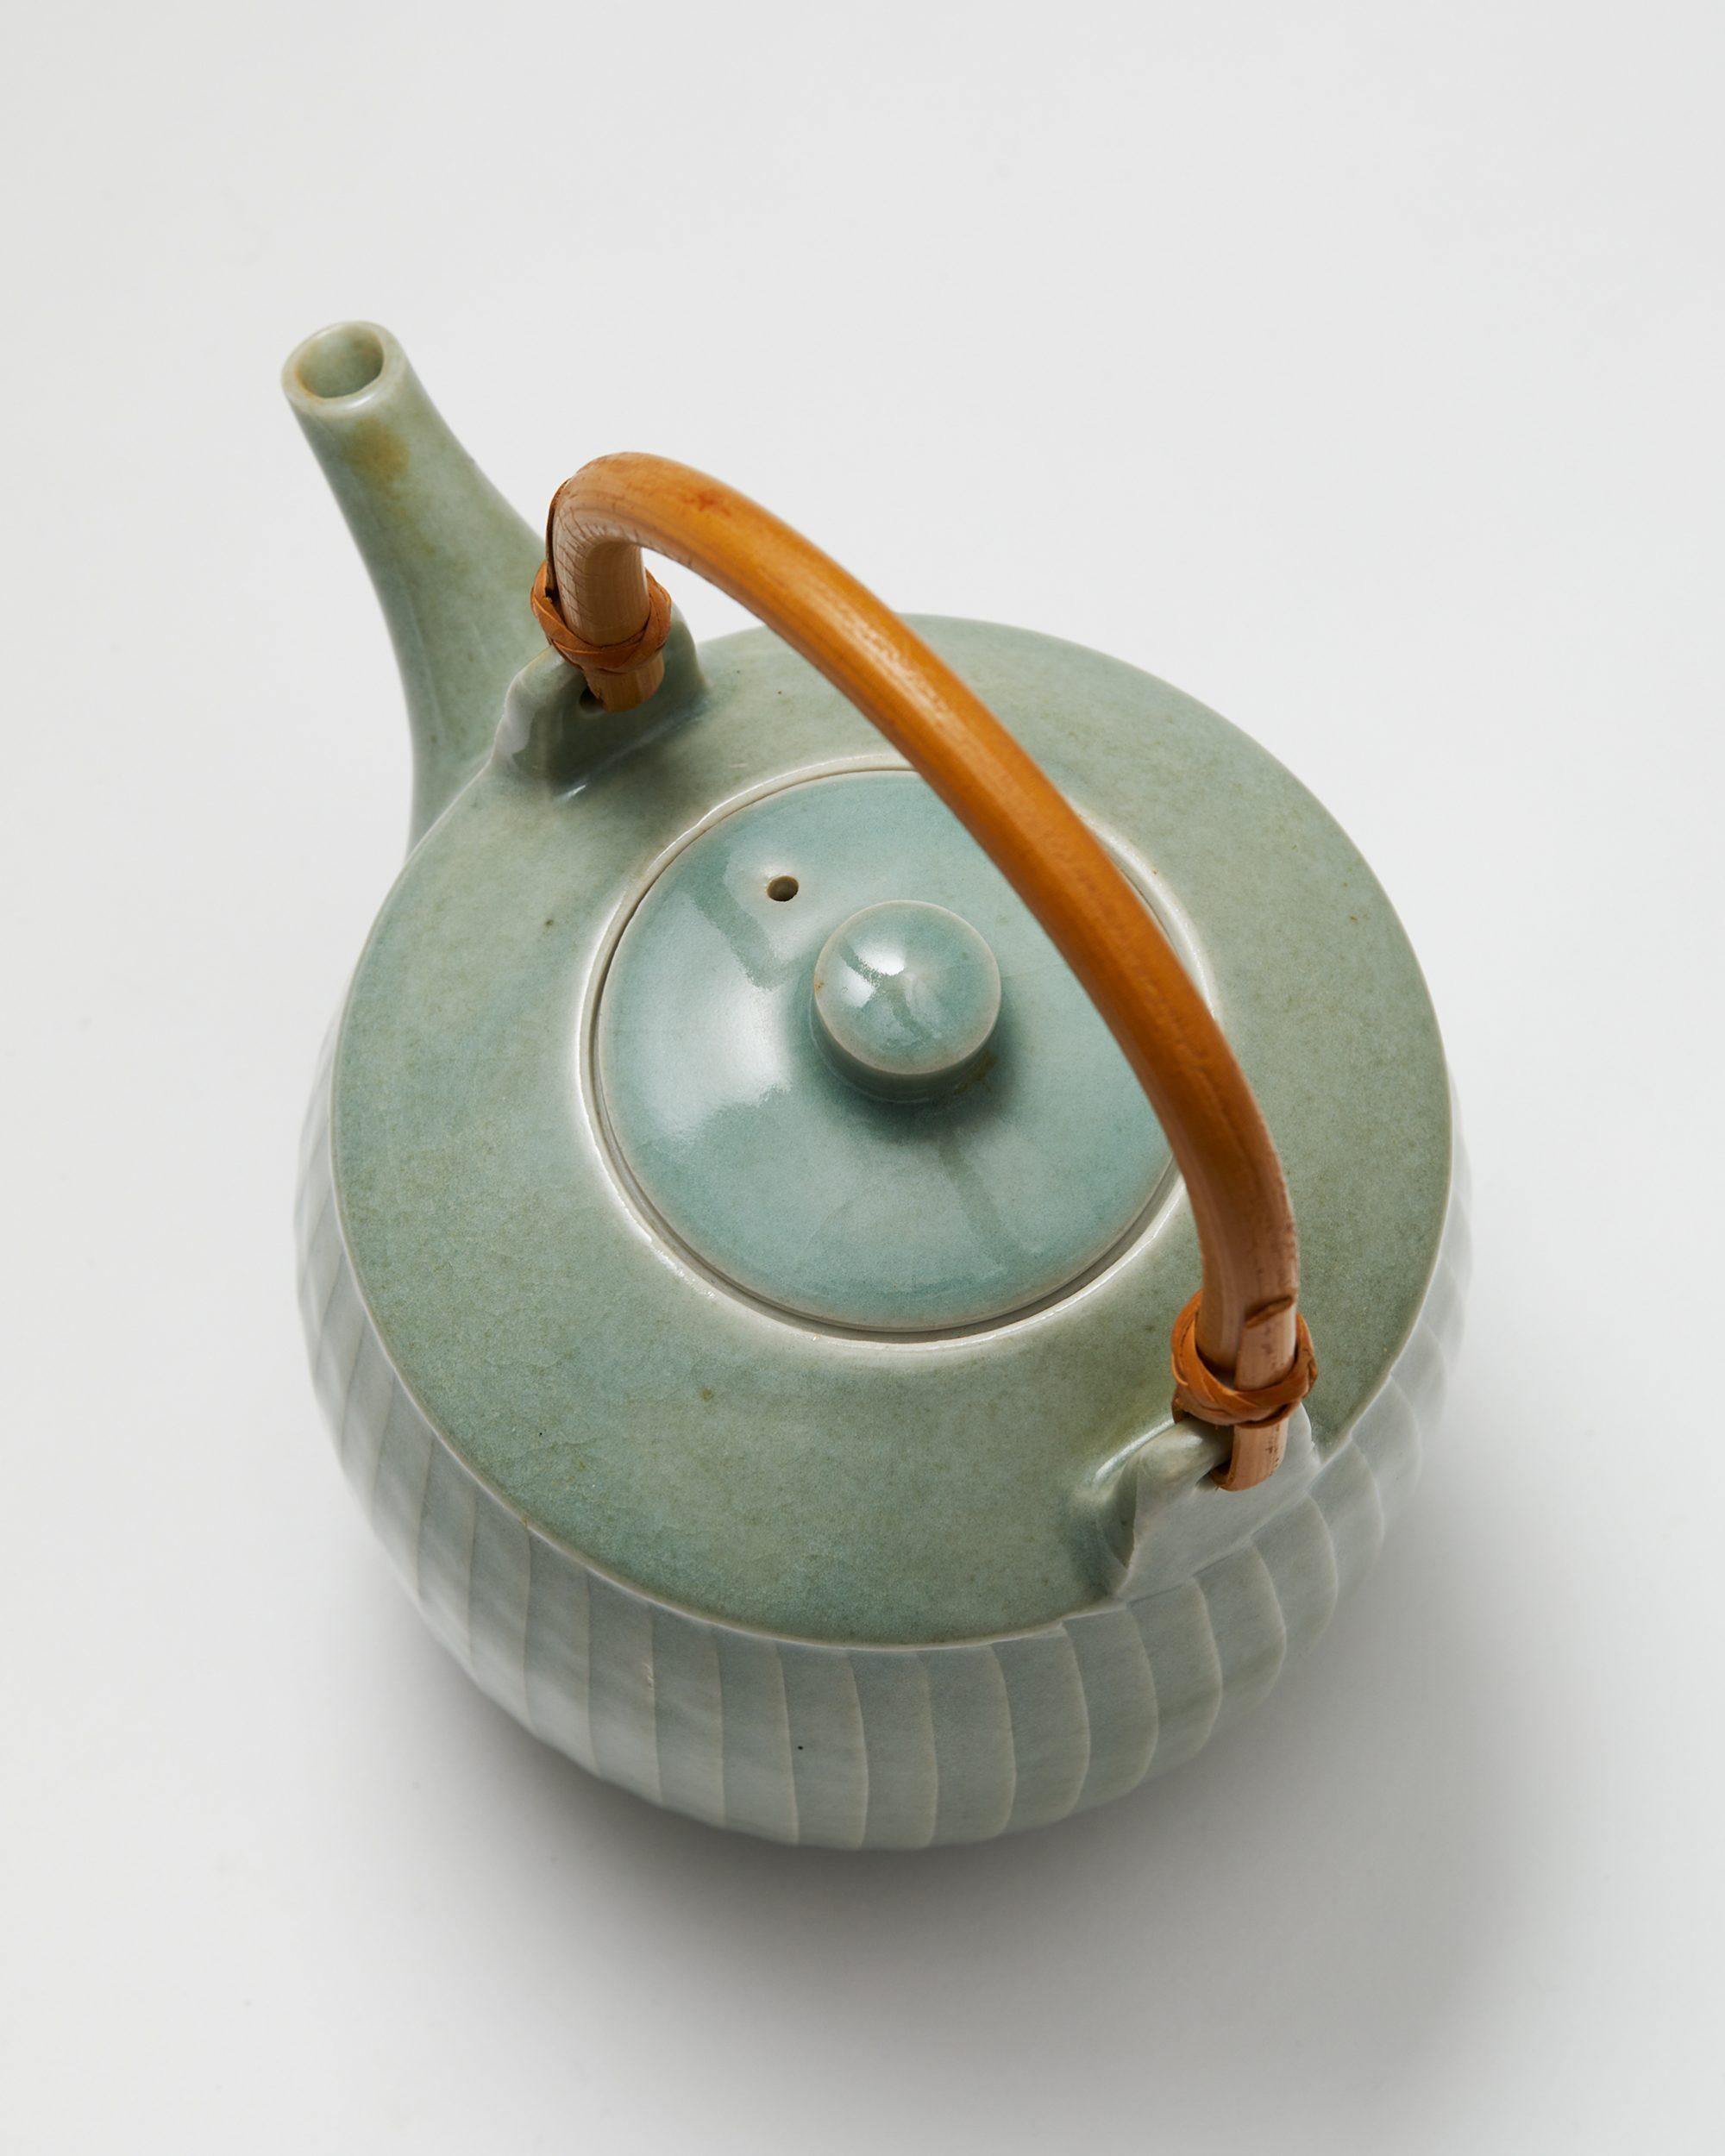 Mid-20th Century Teapot designed by David Leach, England, 1960's.